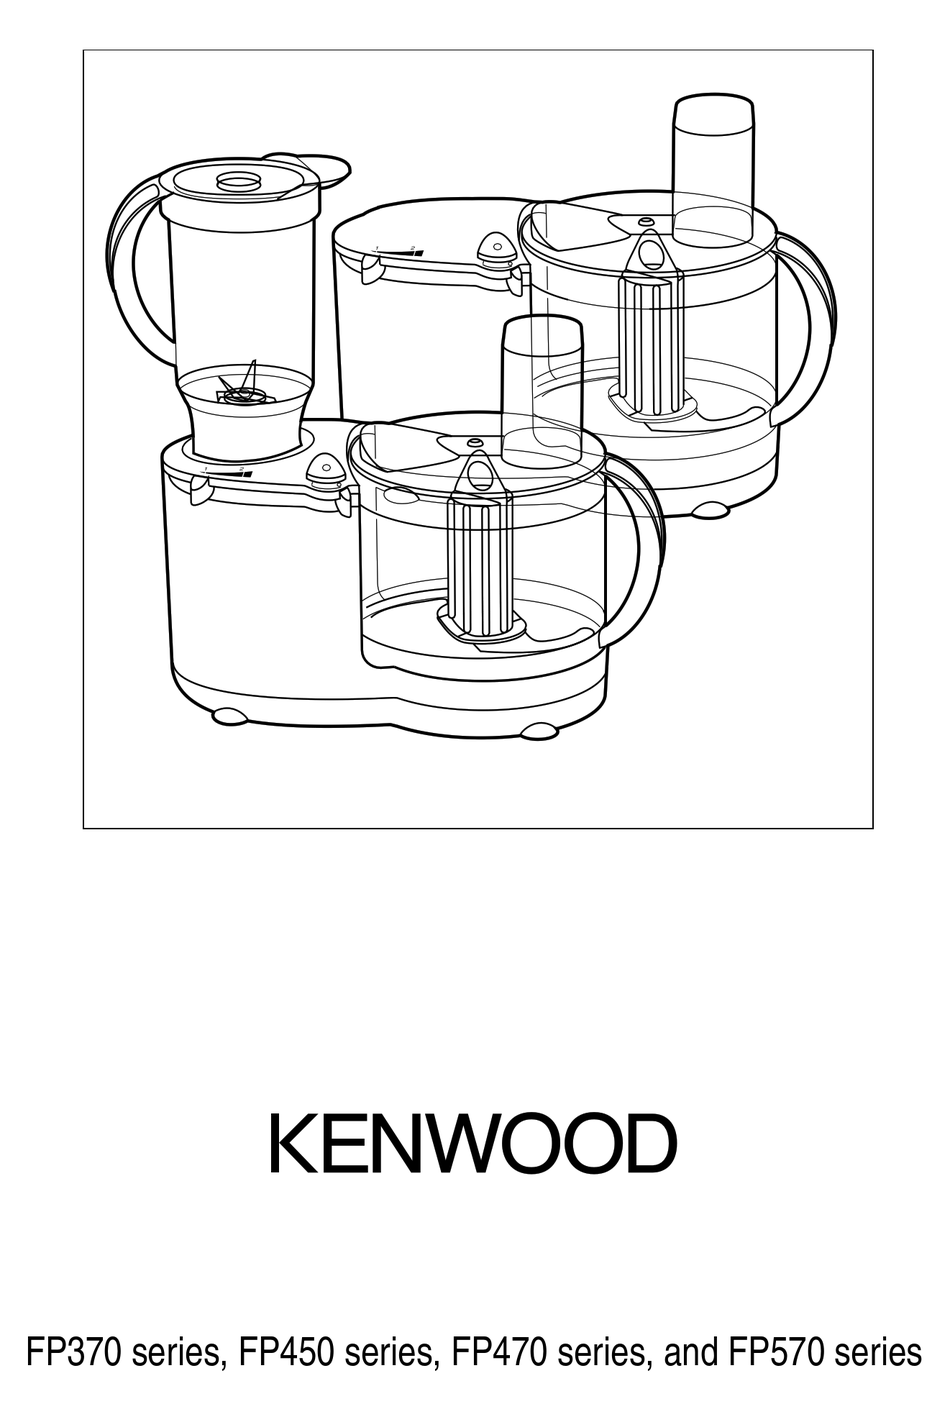 KENWOOD TRITATUTTO doppia Pusher FP350 FP370 FP450 FP460 FP470 FP480 